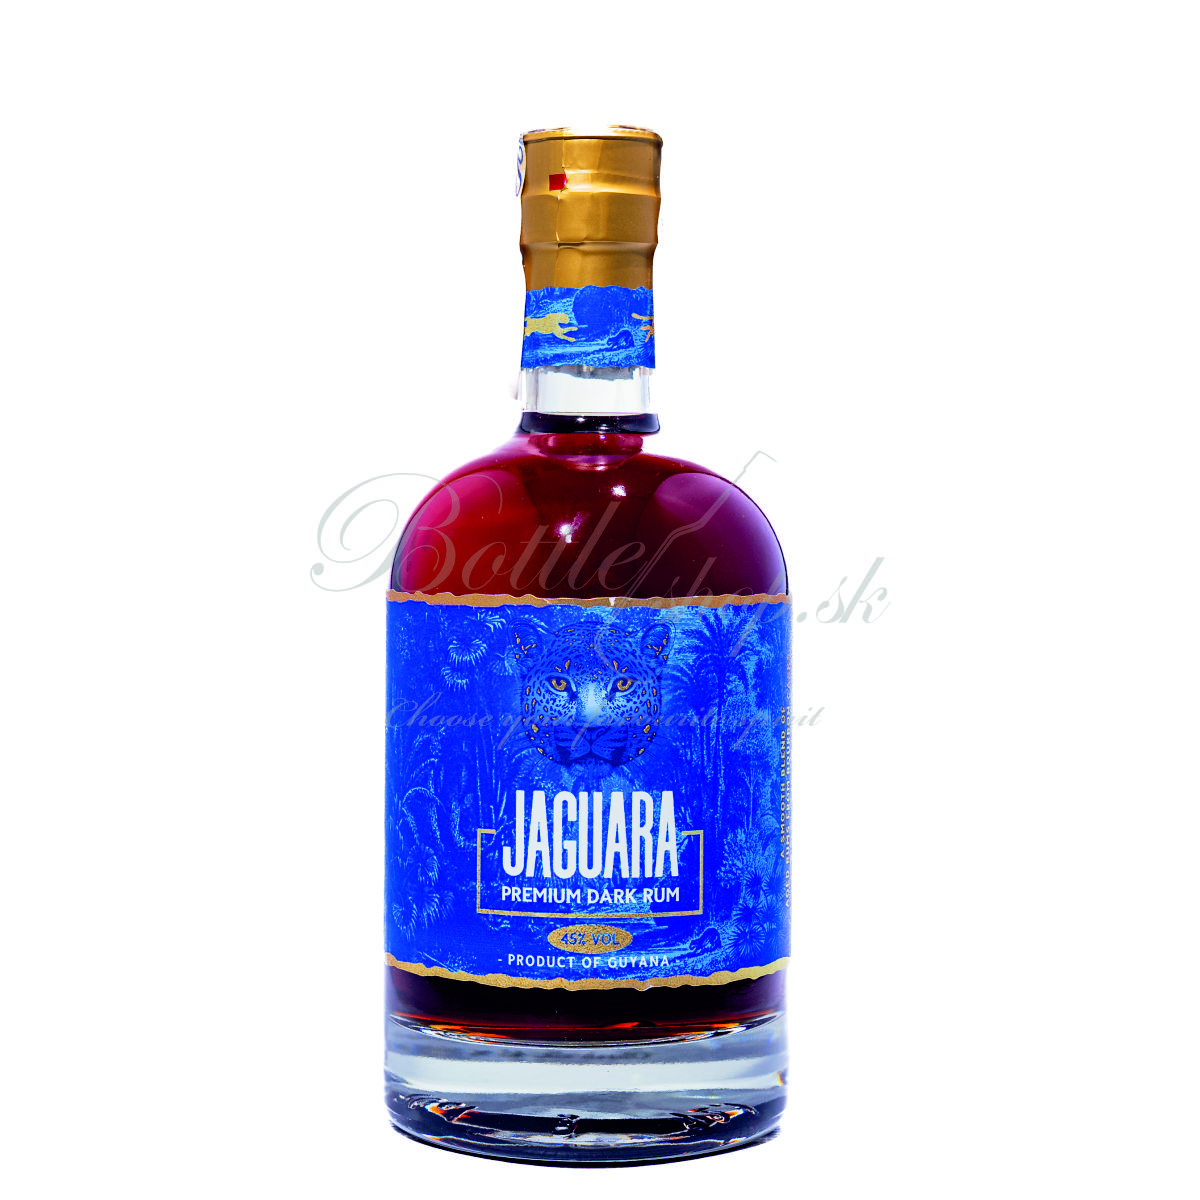 jaguara premium dark rum 0,7l